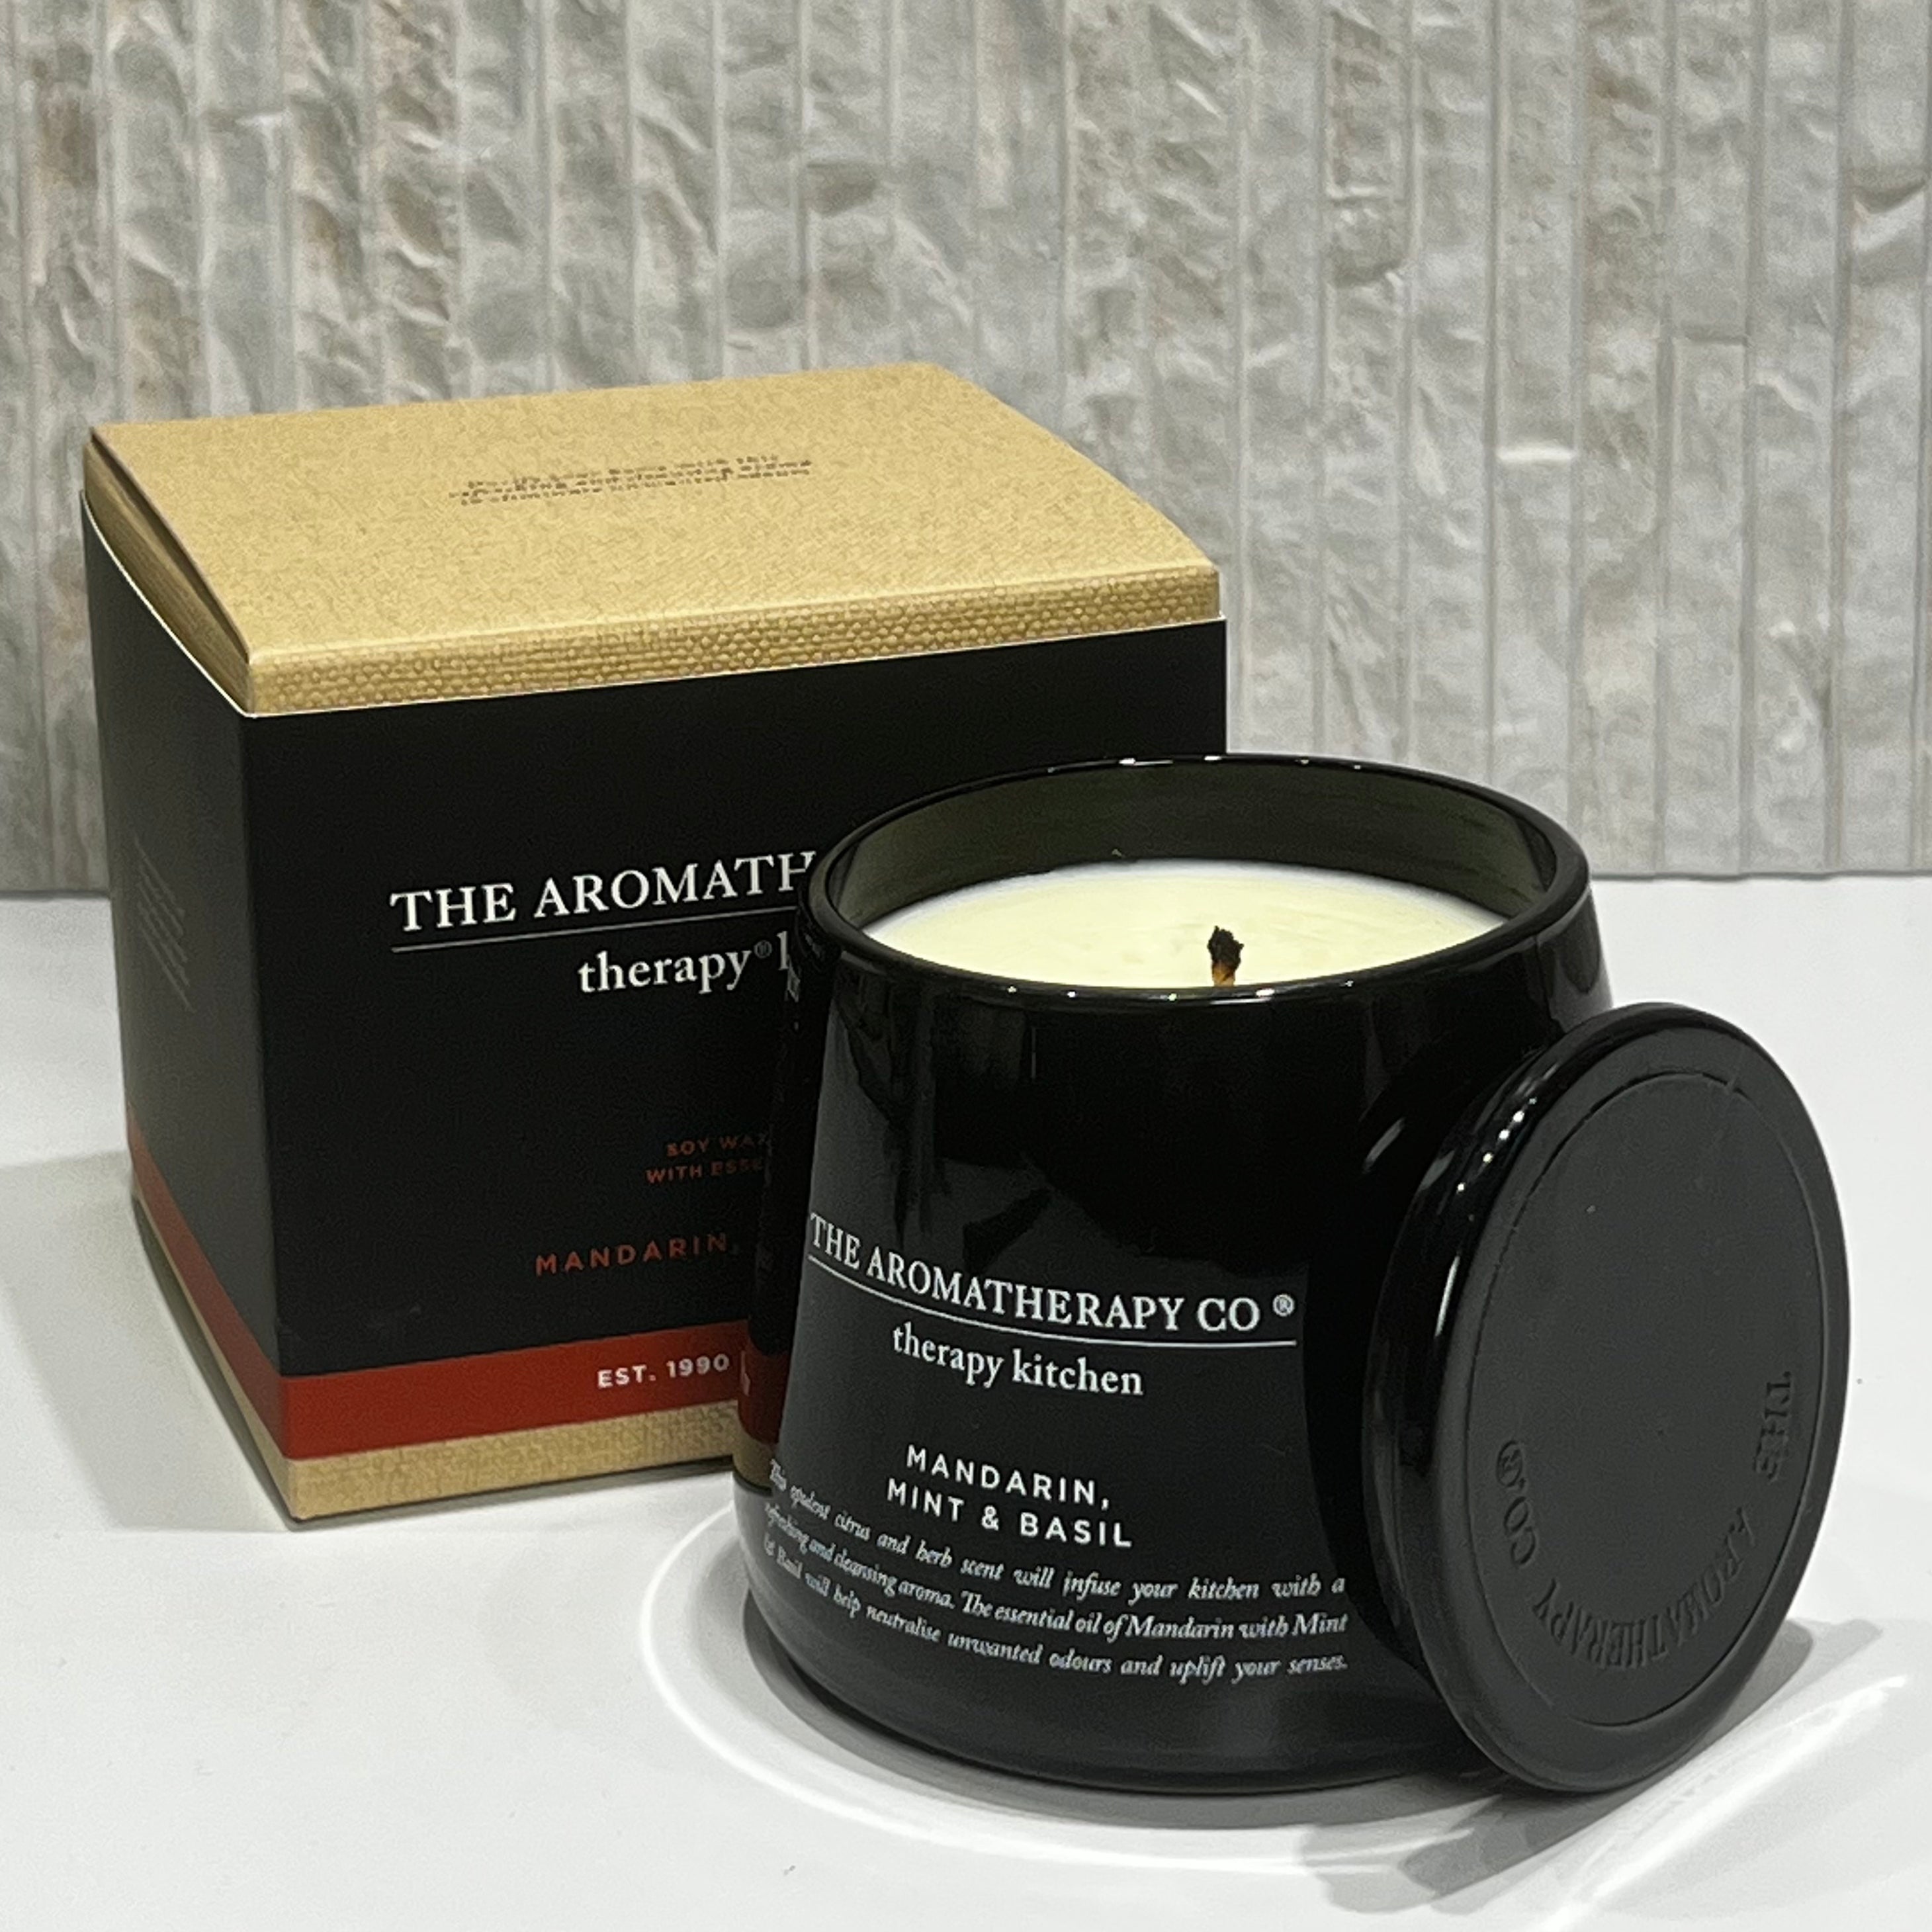 The Aromatherapy Co Therapy Kitchen Mandarin Mint & Basil Candle